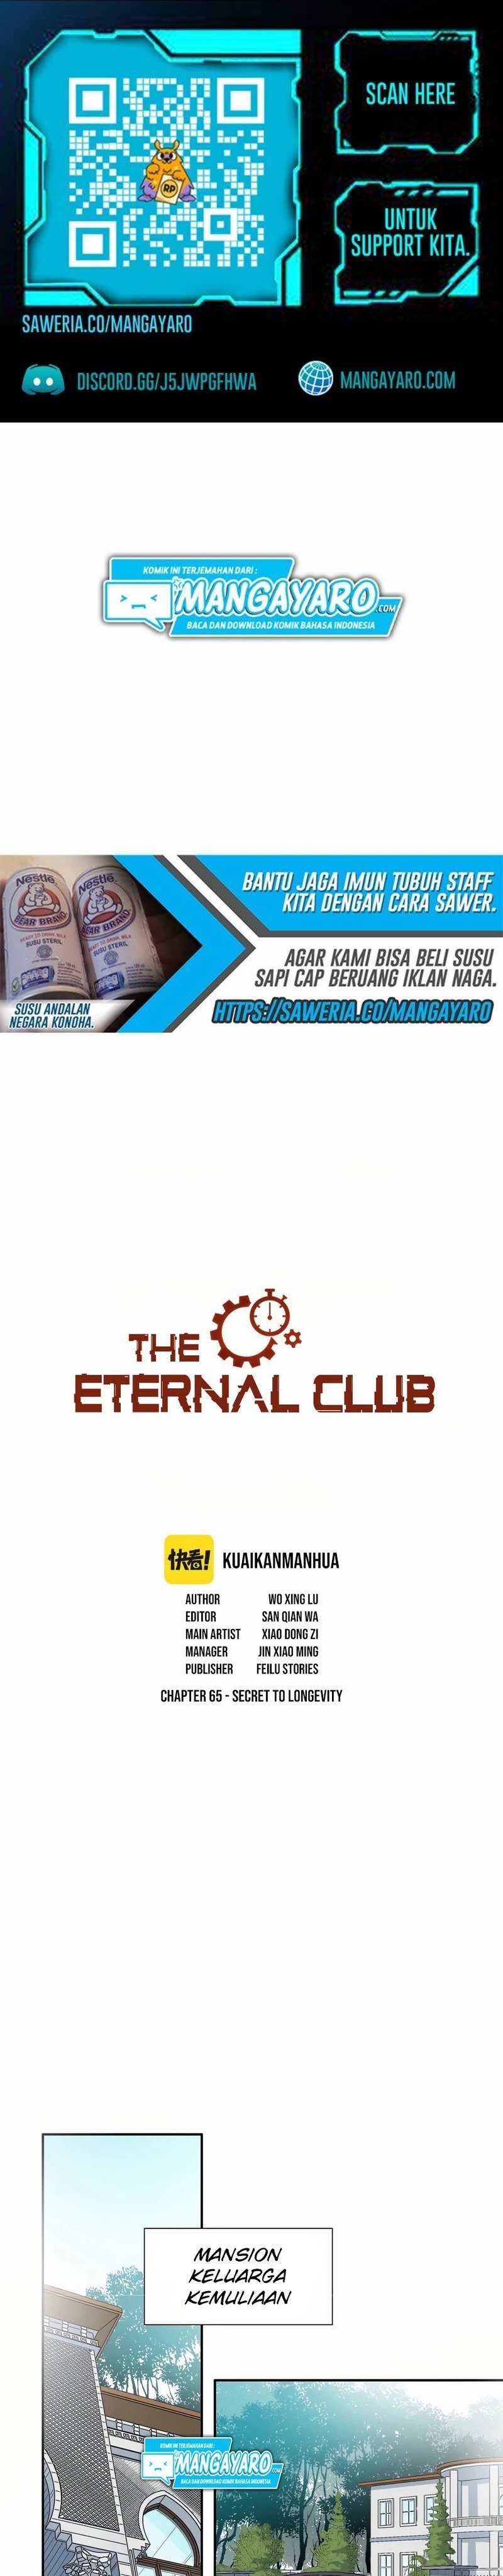 Eternal Club Chapter 65